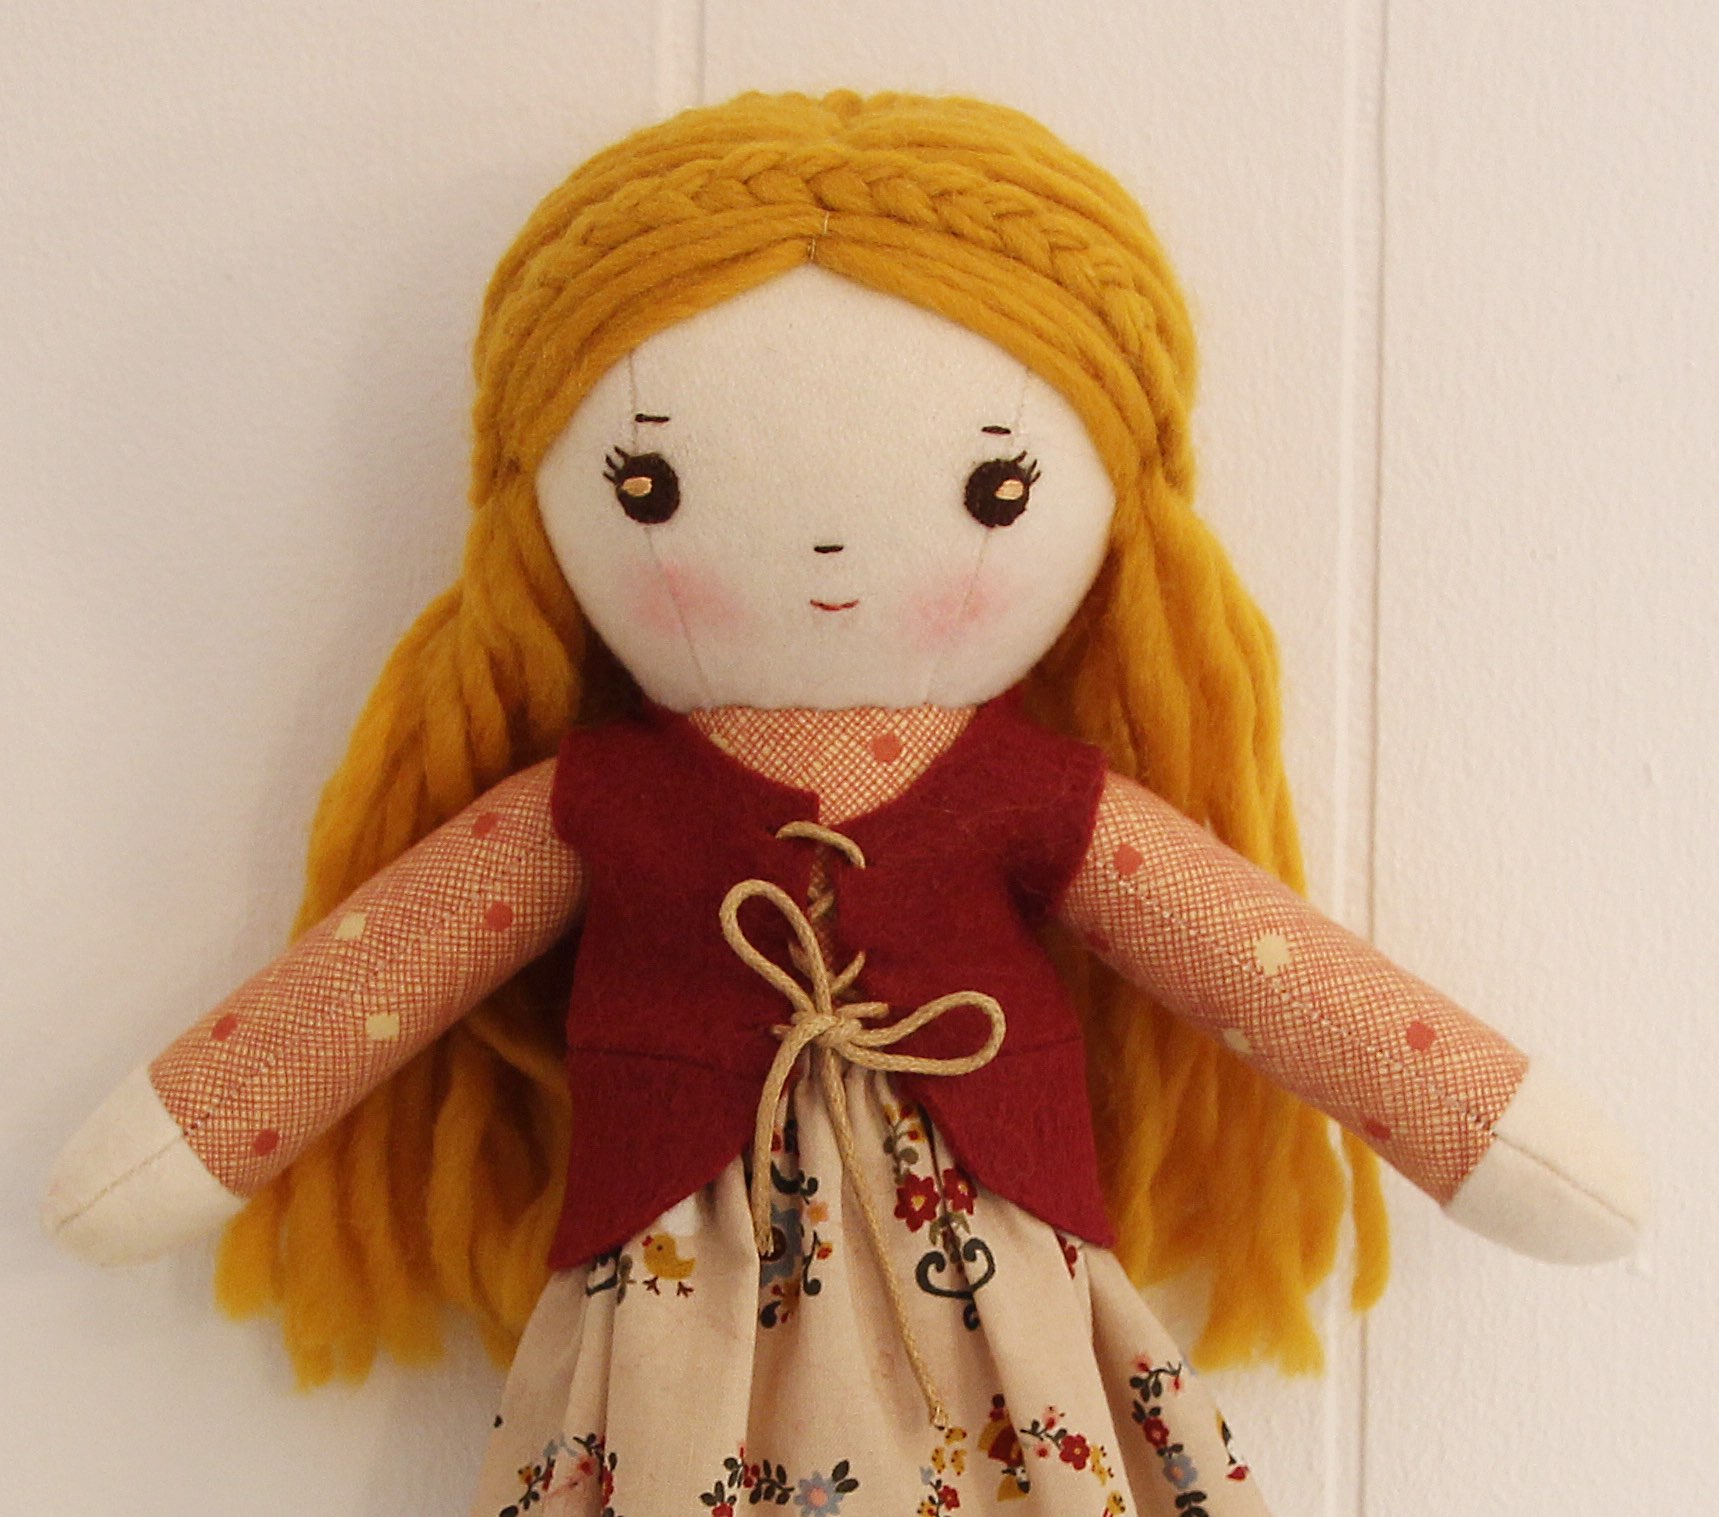 Elsa doll sewing kit